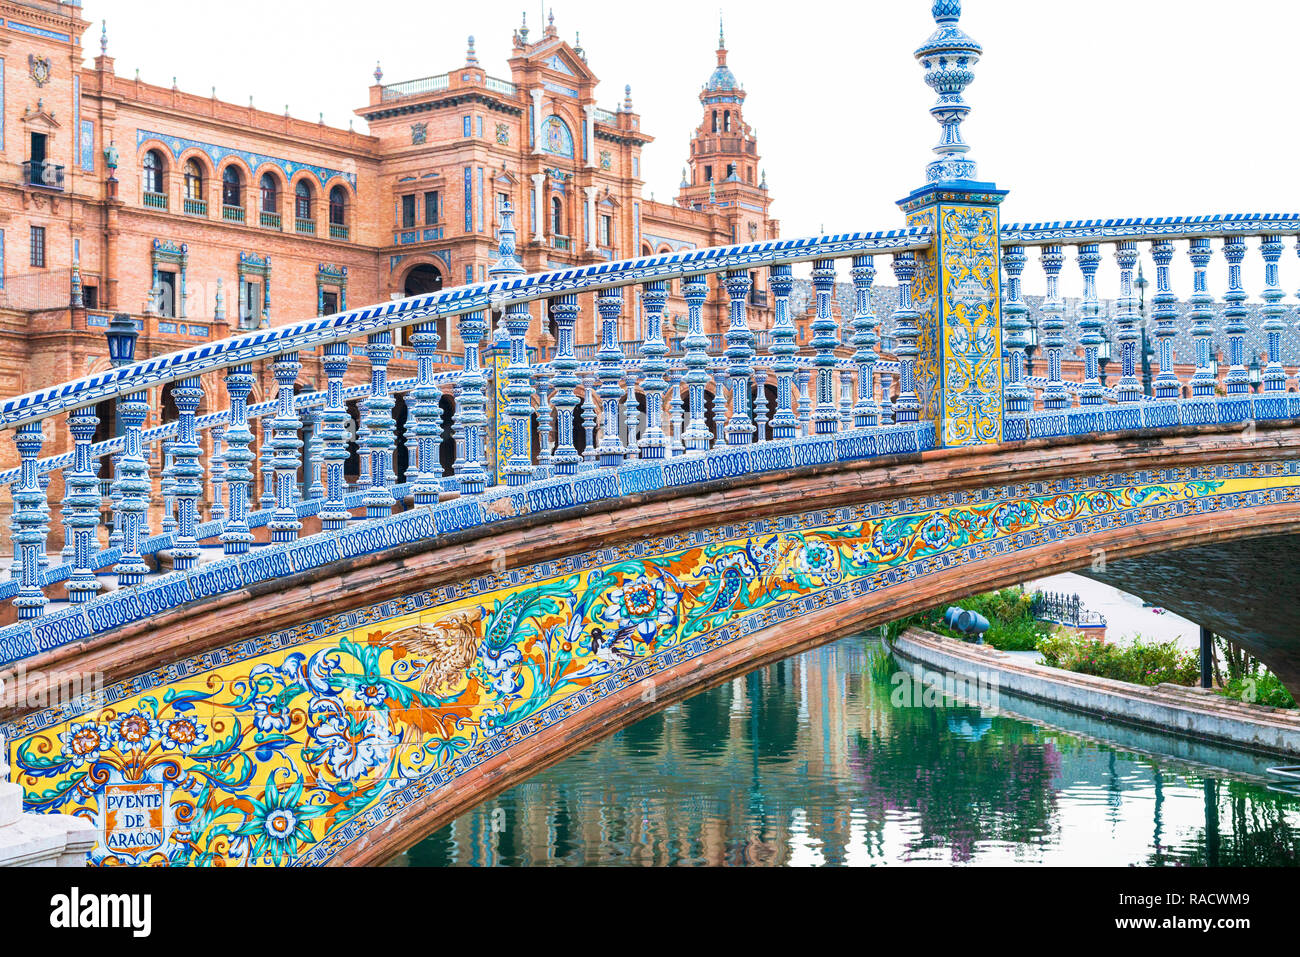 Puente de Aragón decorada con azulejos, baldosas de cerámica española en estilo Art Deco, Plaza de España, Sevilla, Andalucía, España, Europa Foto de stock